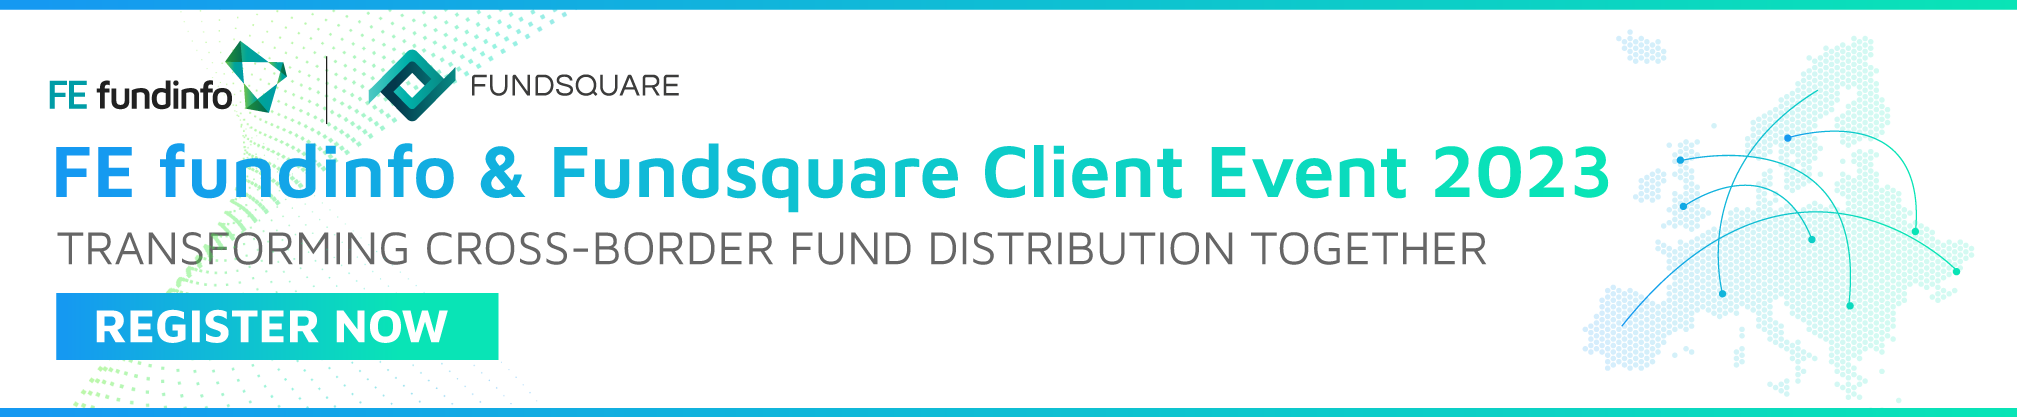 FE fundinfo & Fundsquare Client Event 2023